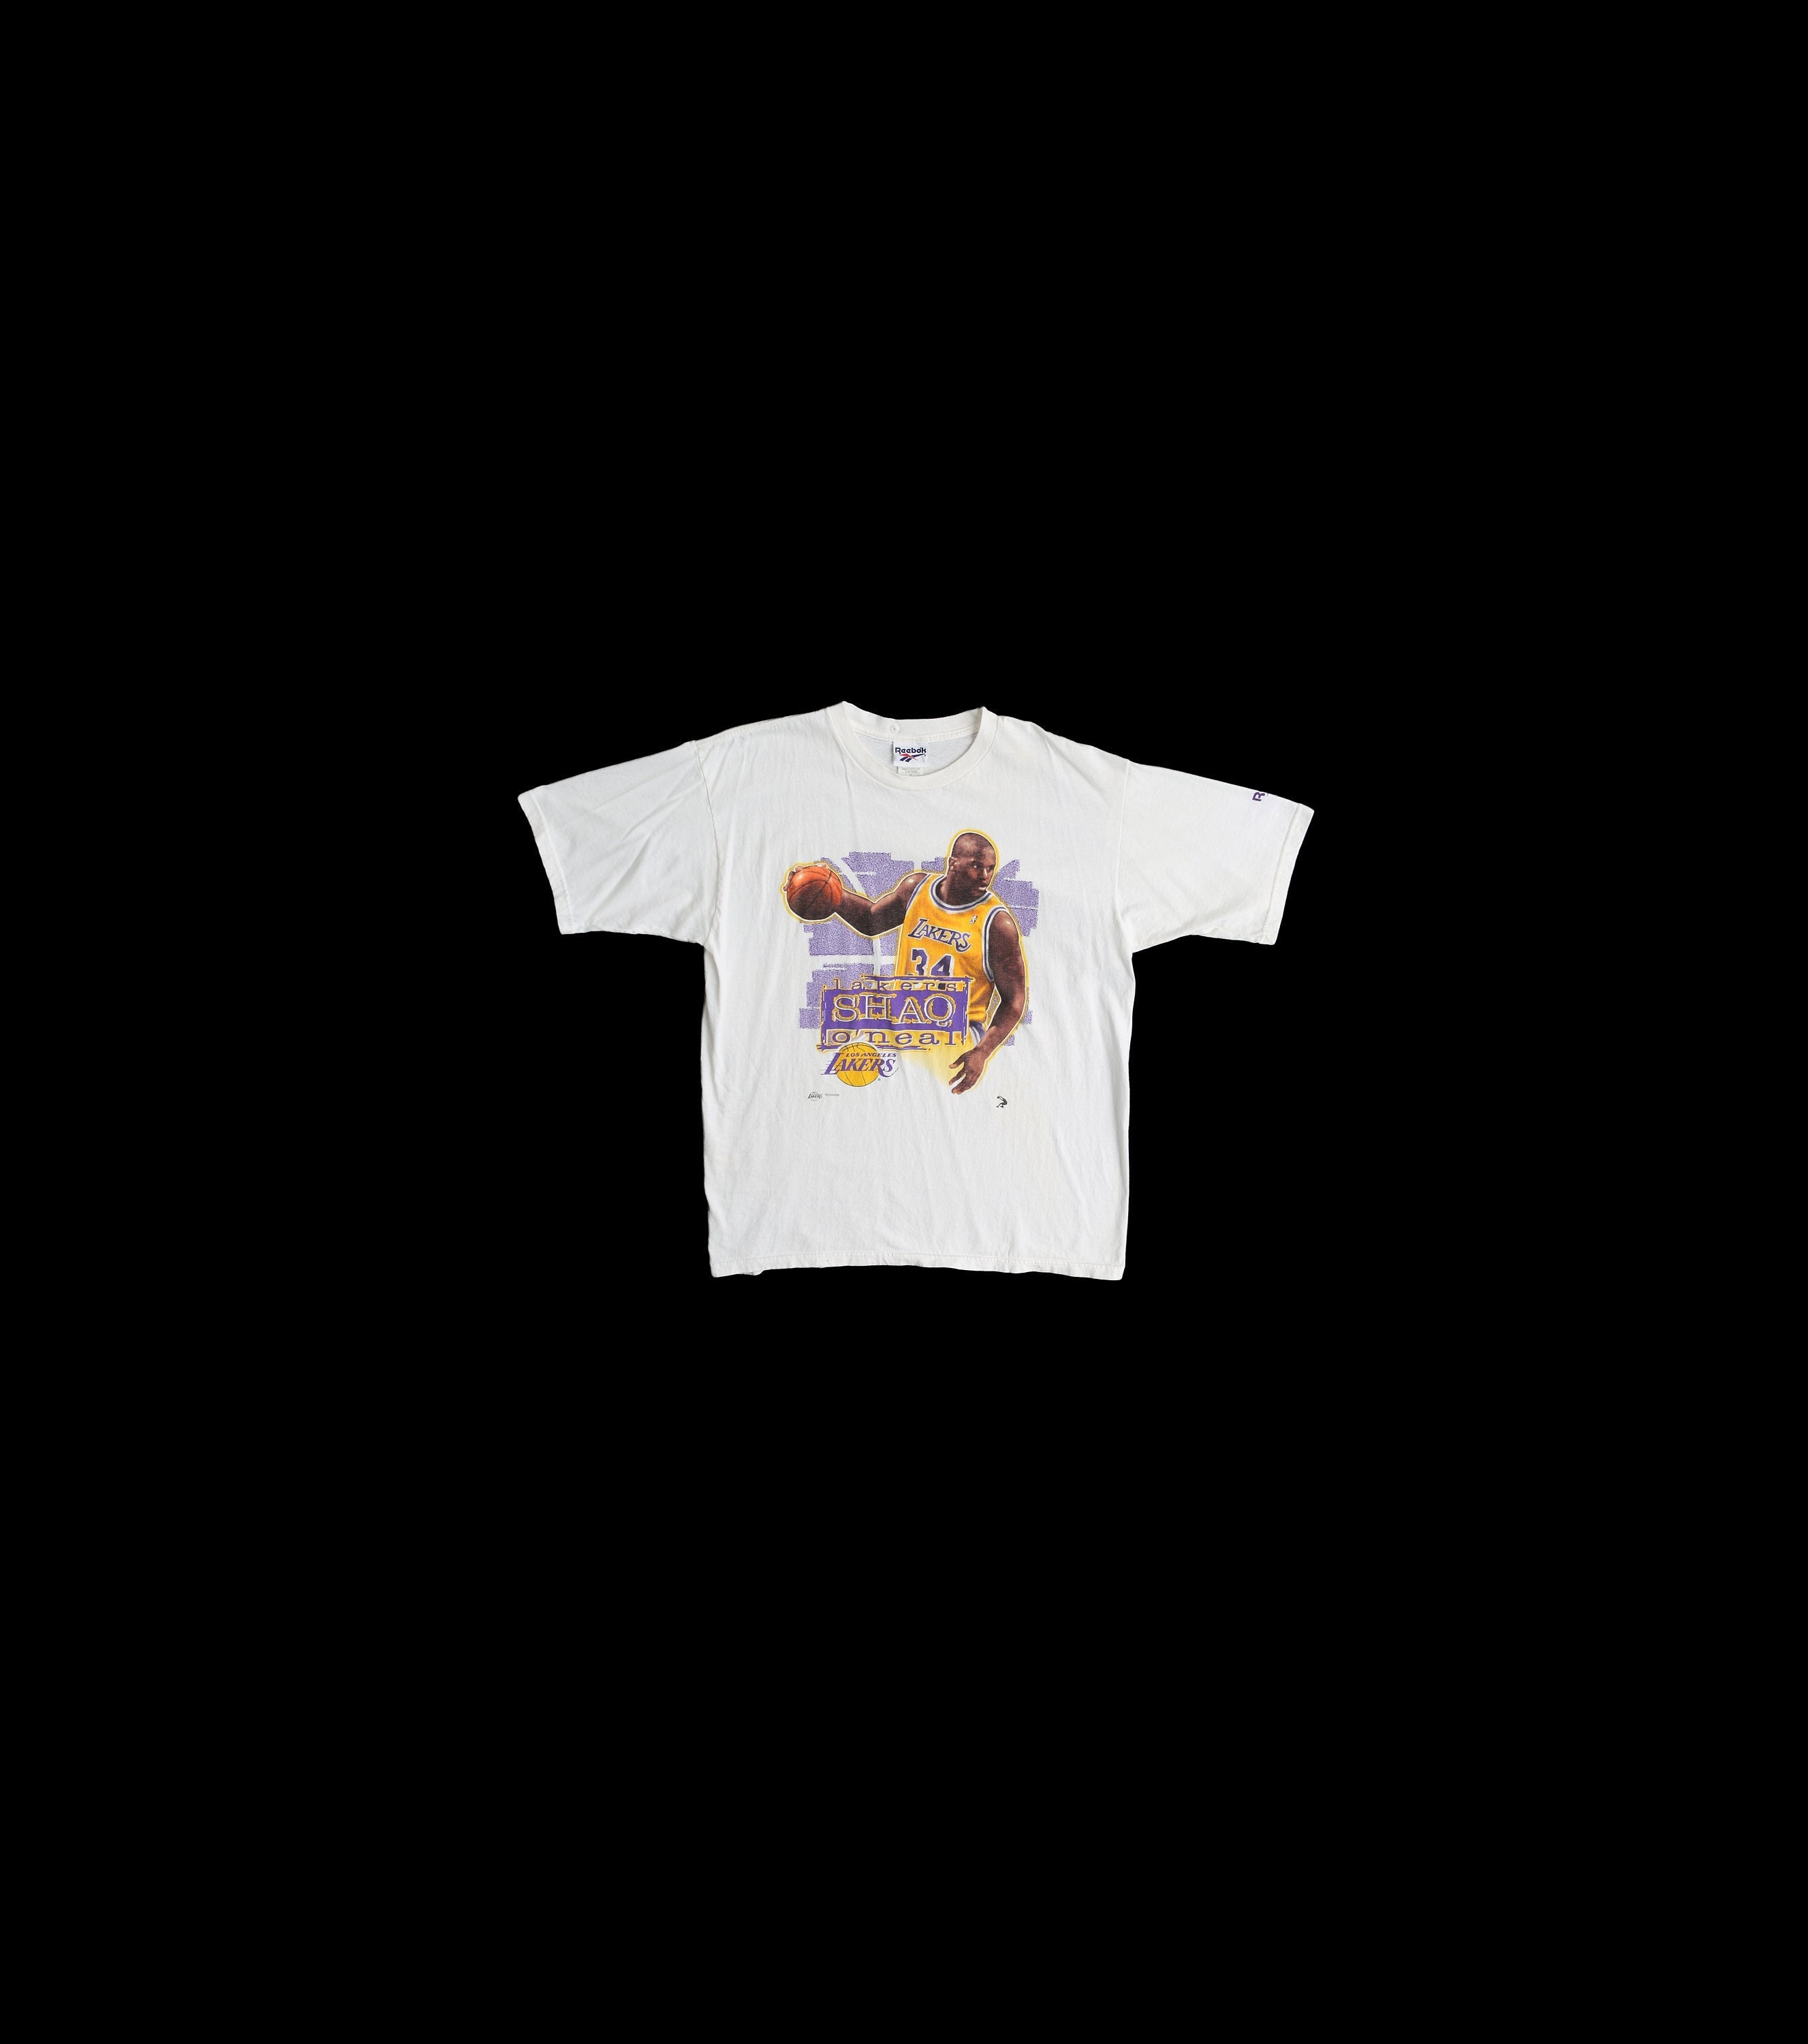 Vintage 00s Cotton Purple Reebok Lakers Los Angeles T-Shirt